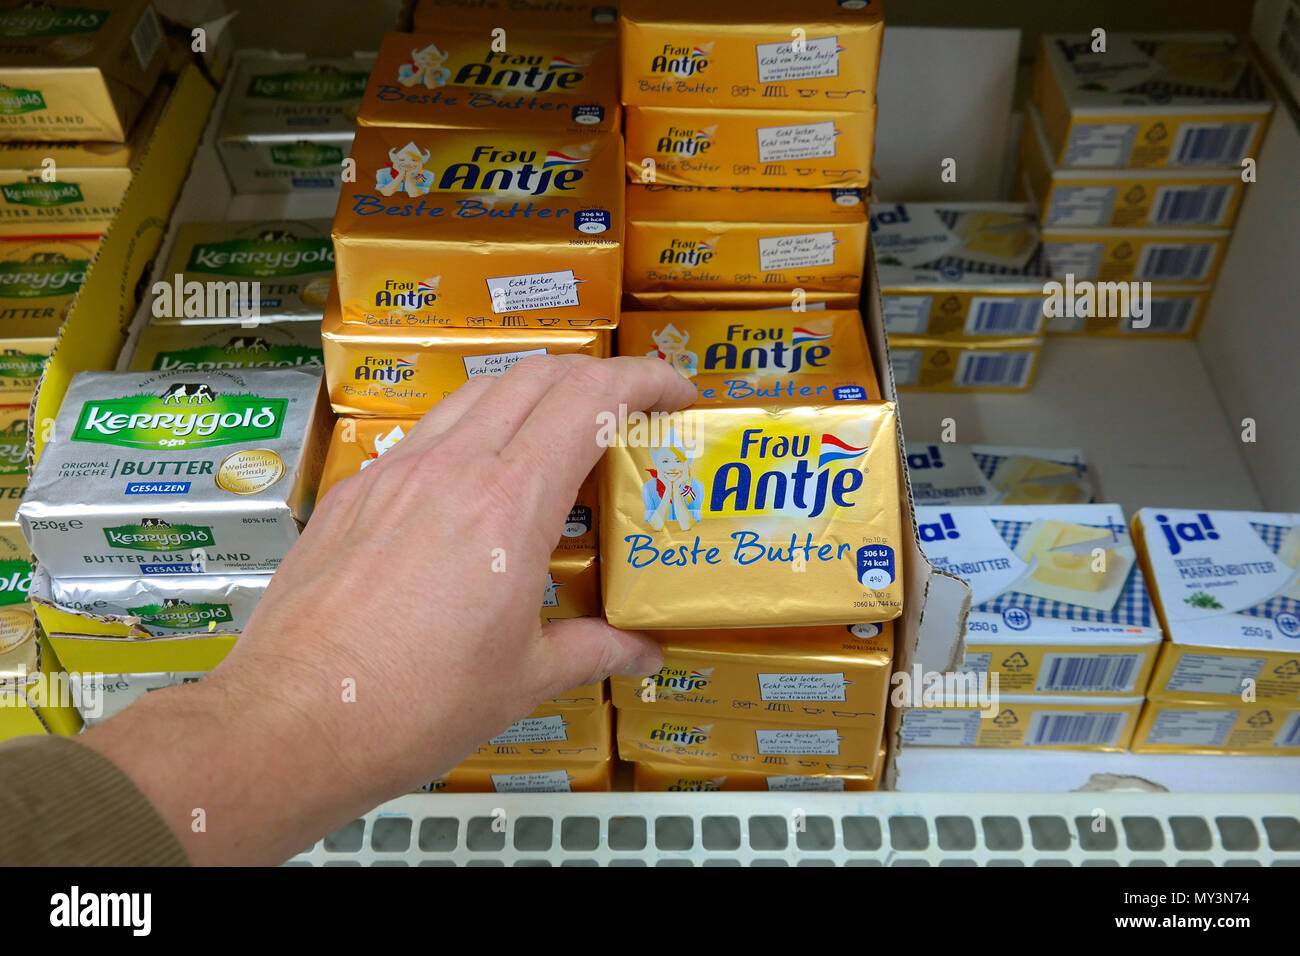 Frau Antje Dutch butter in a German supermarket. Stock Photo